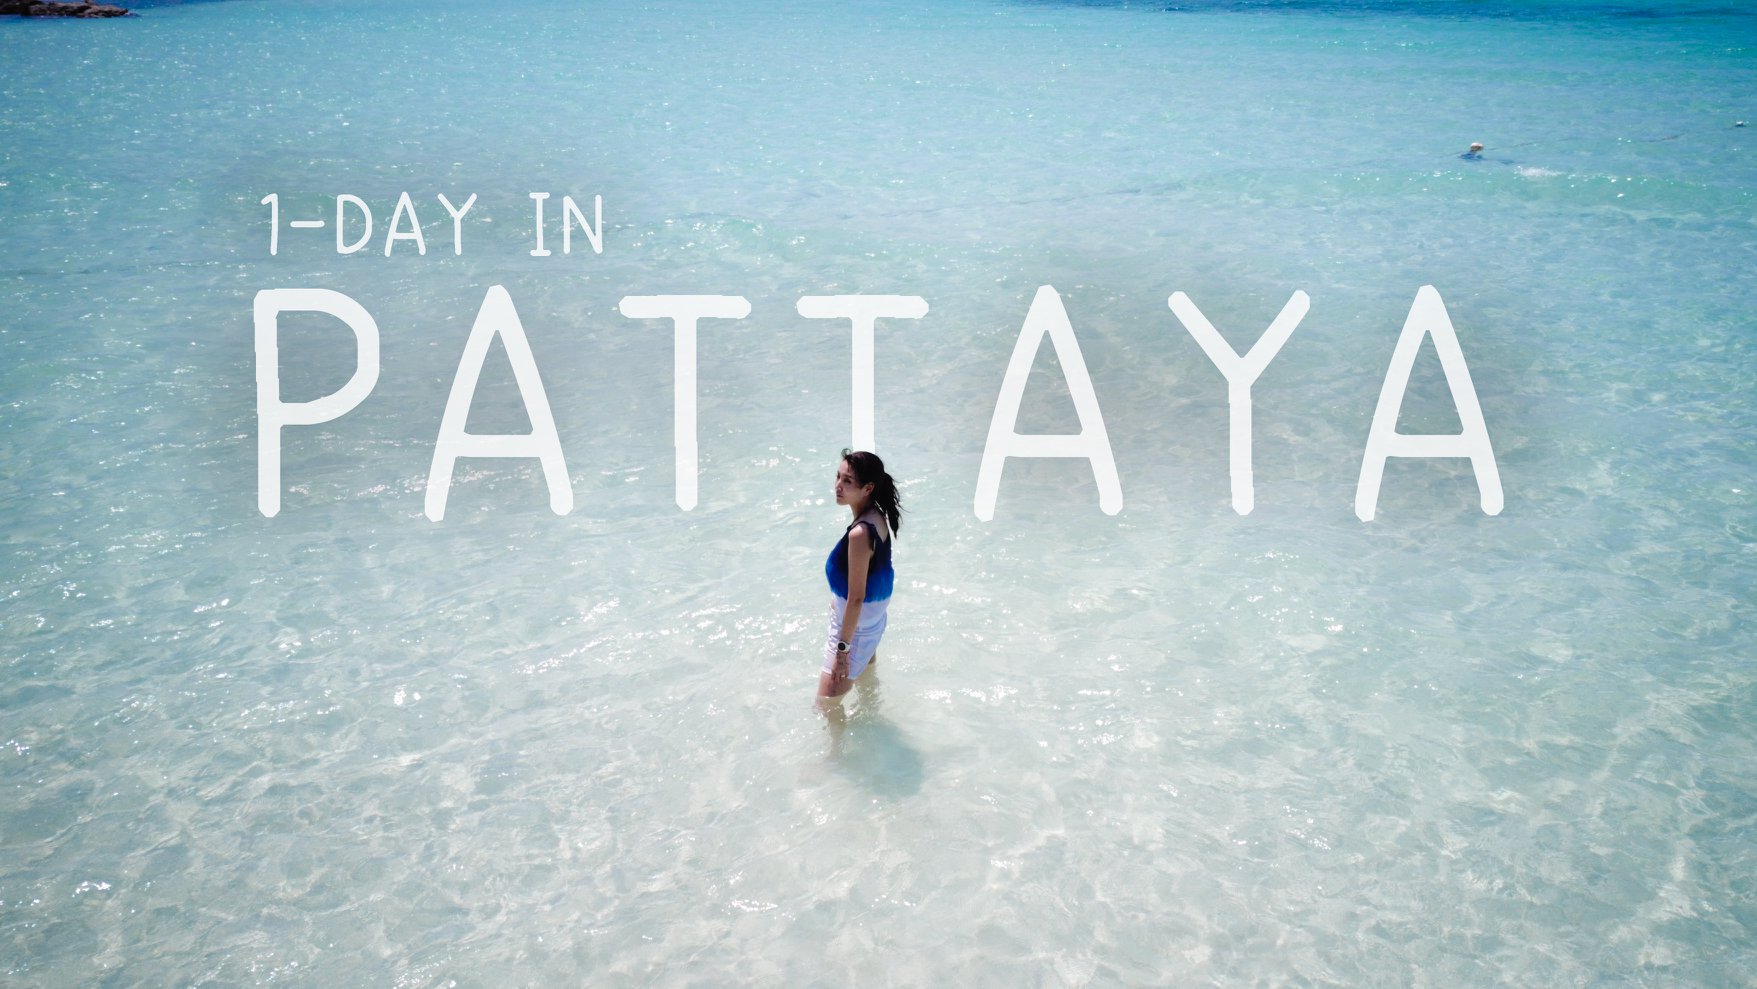 1-Day in Pattaya ไม่ได้ทำแค่นั่งชายหาด รอพระอาทิตย์ตกดิน แล้วกลับกรุงเทพ  มาดูกัน!!! - Pantip